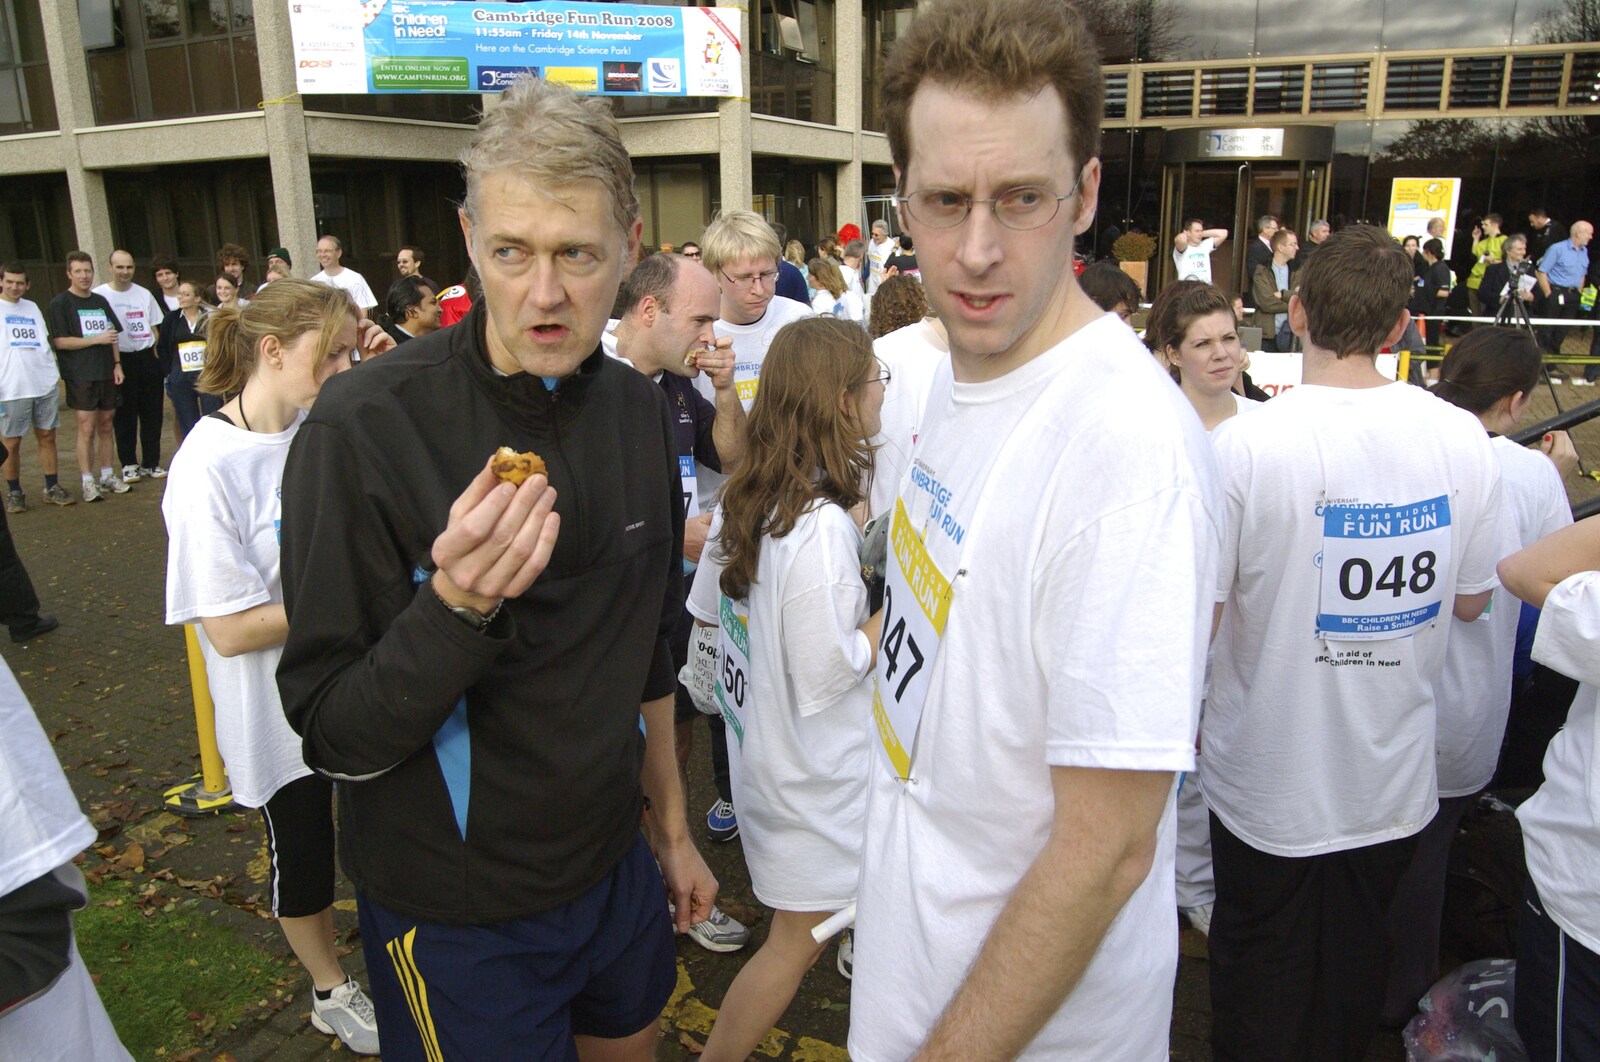 Steve and Brett furtively scoff muffins from The Cambridge Fun Run, Milton Road, Cambridge - 14th November 2008